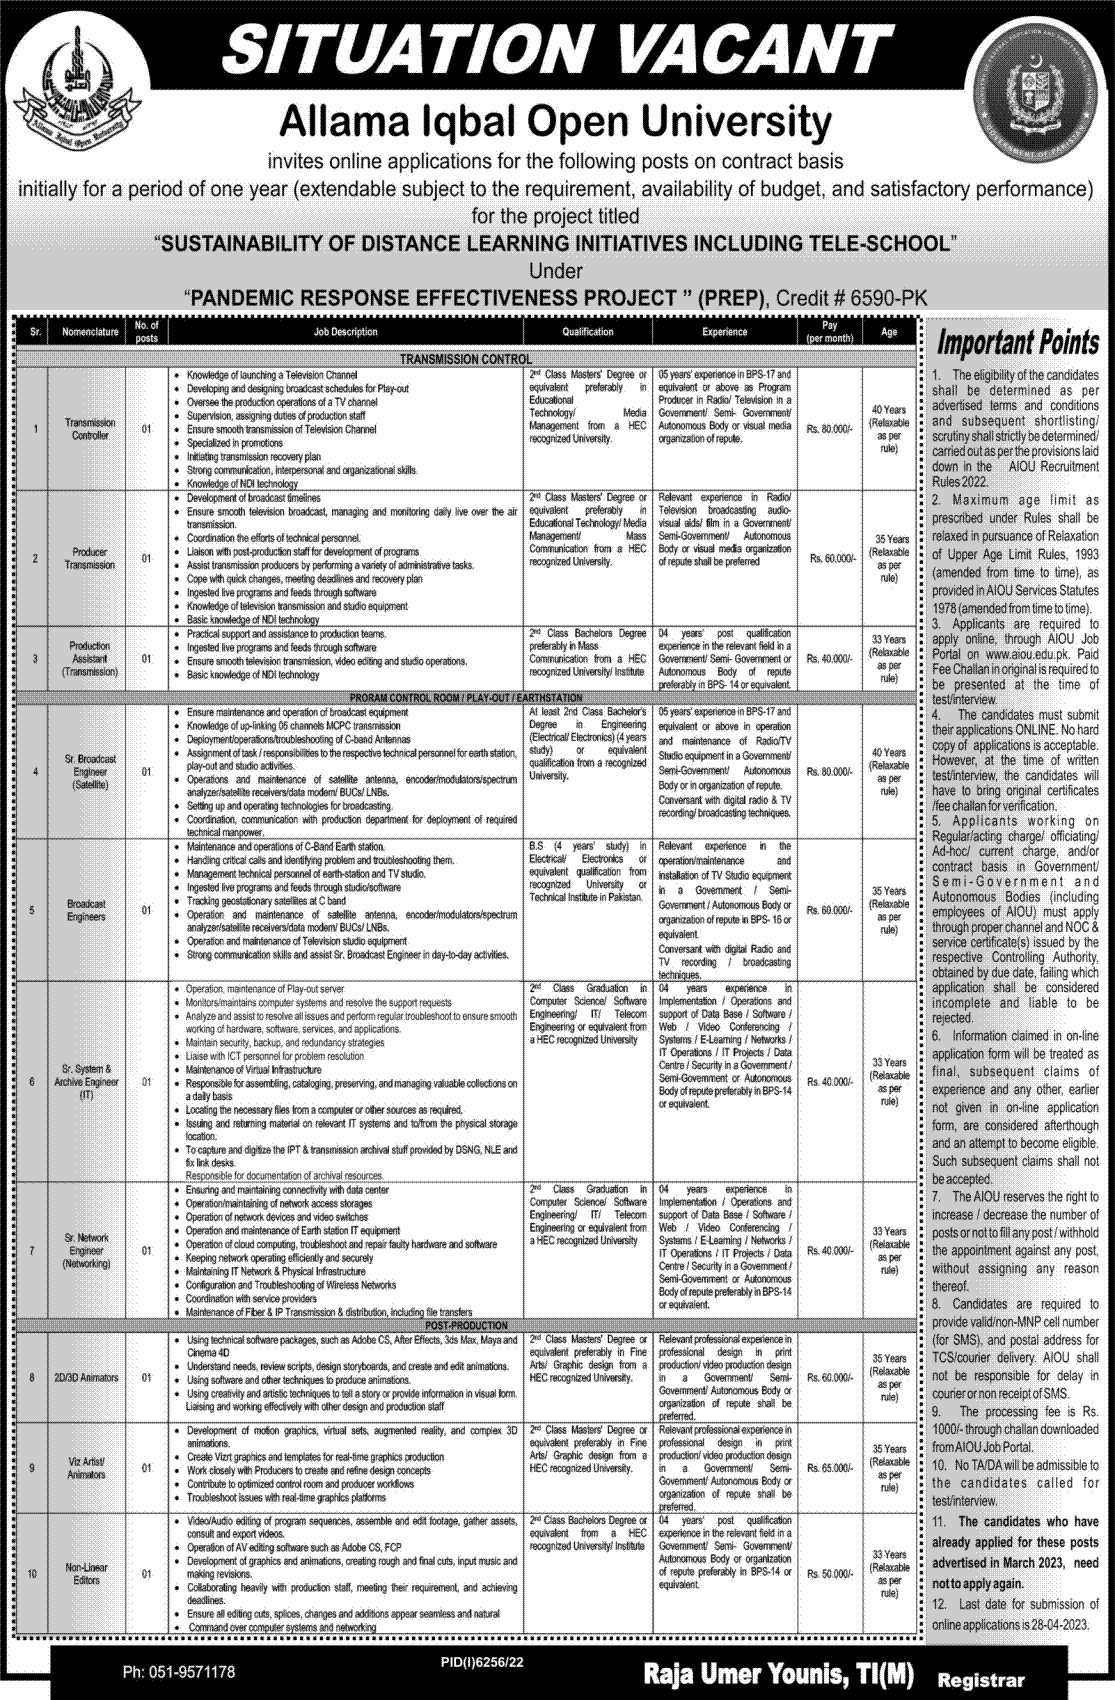 The Latest Vacancies in Allama Iqbal Open University (AIOU) Islamabad